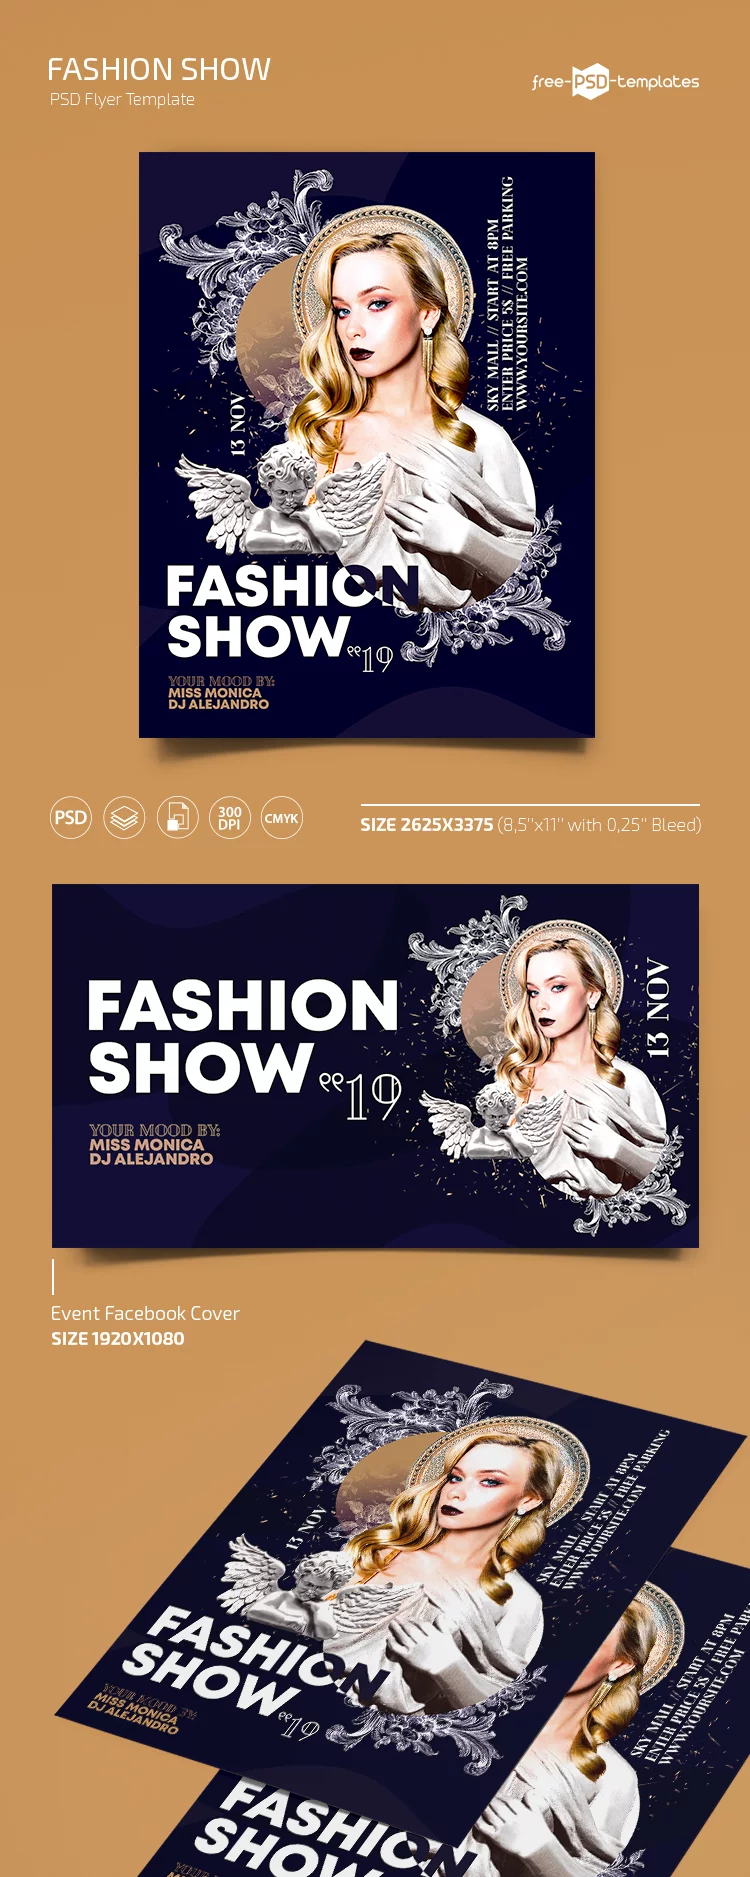 10 Fashion Show Poster ideas  fashion show poster, fashion show